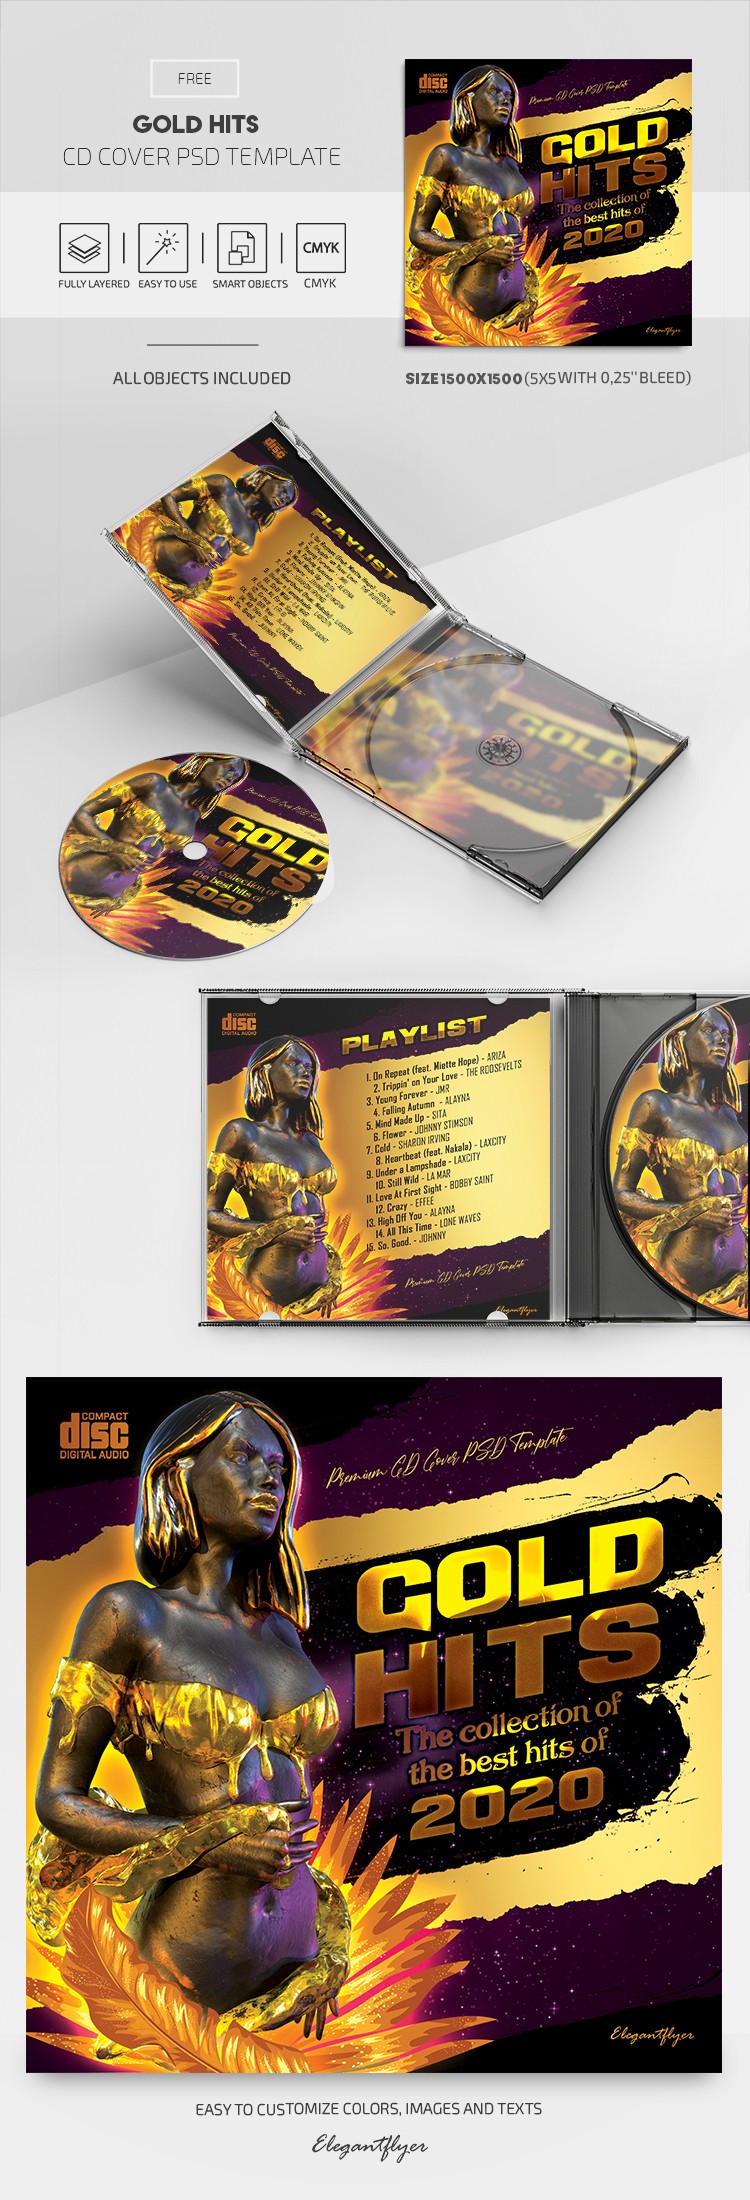 Gold Hits CD Cover by ElegantFlyer